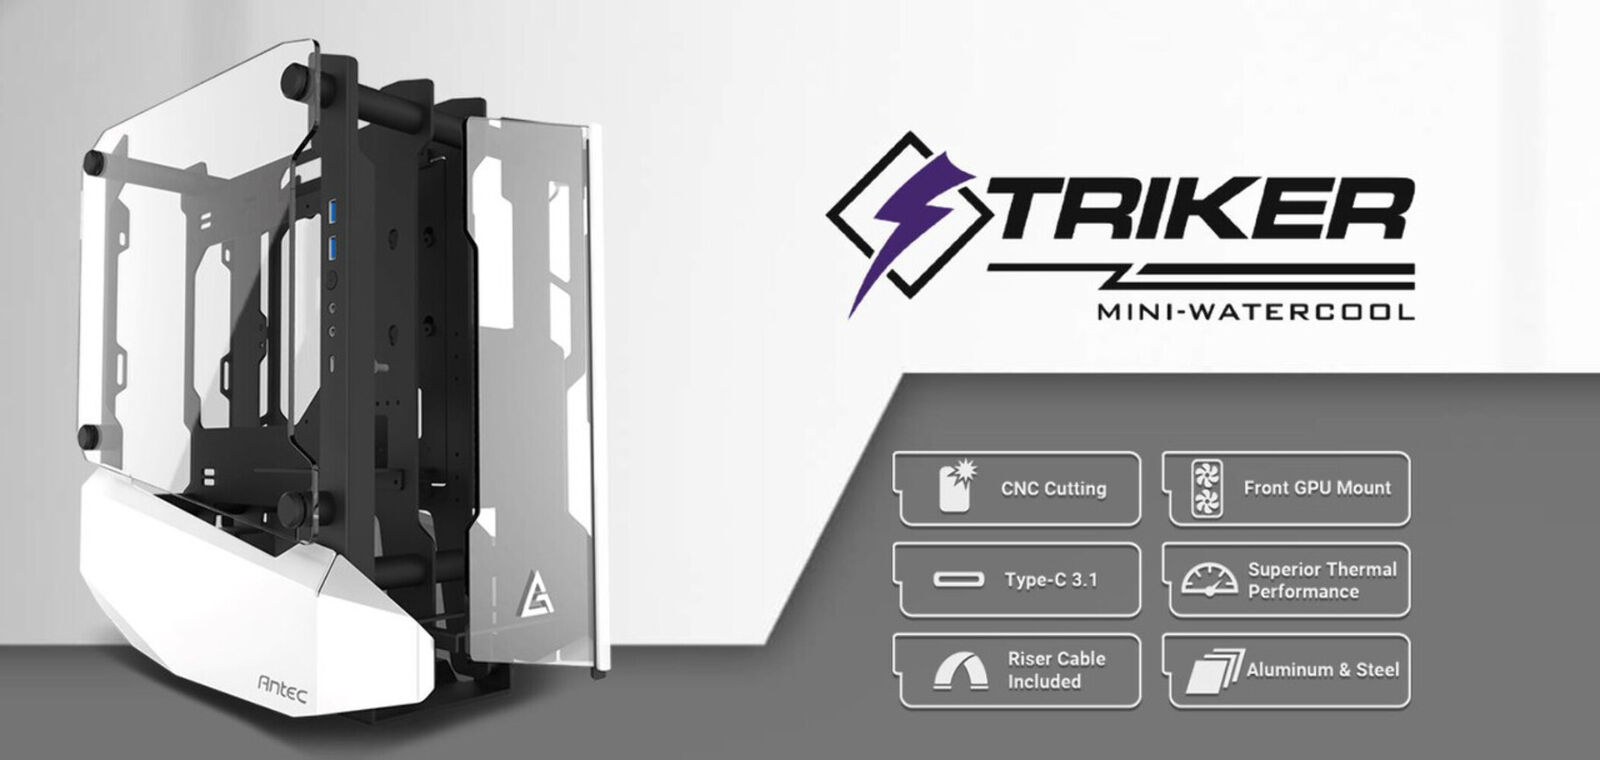 Antec STRIKER Open Frame Mini-ITX Aluminium and Steel Case, PCI-E Riser Cable in